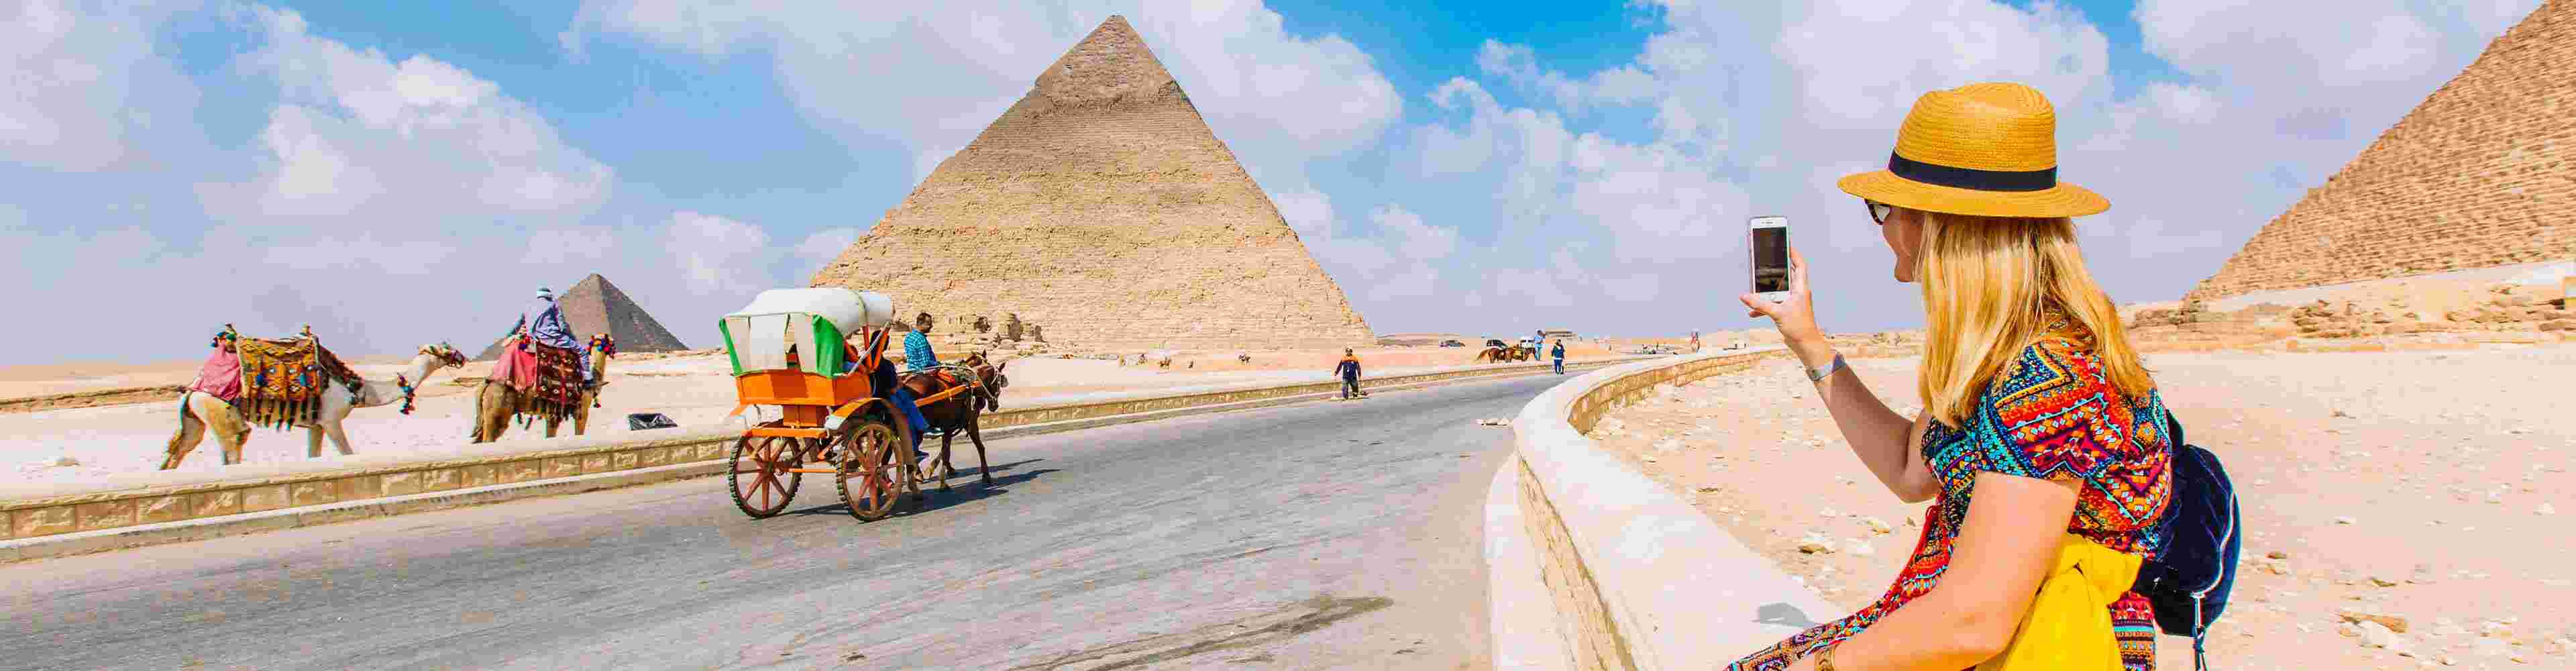 intrepid travel egypt experience